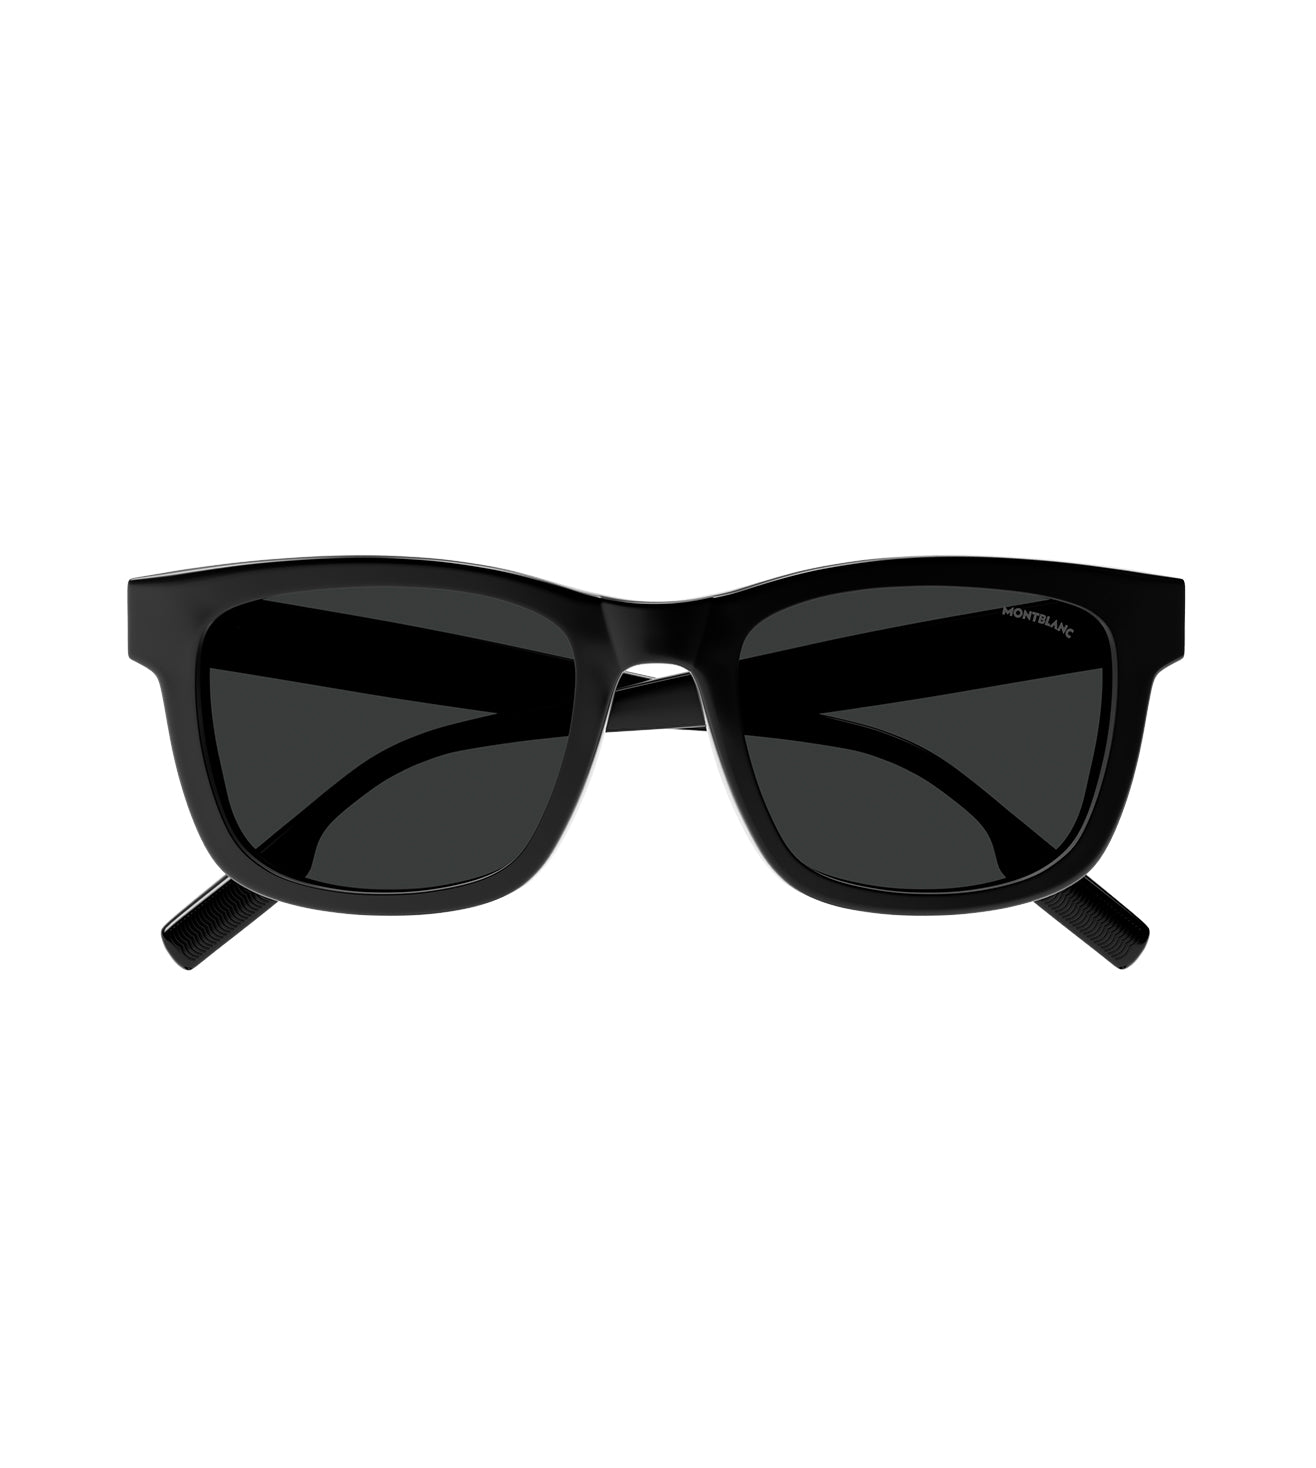 Wayfarer style glasses | Specsavers New Zealand